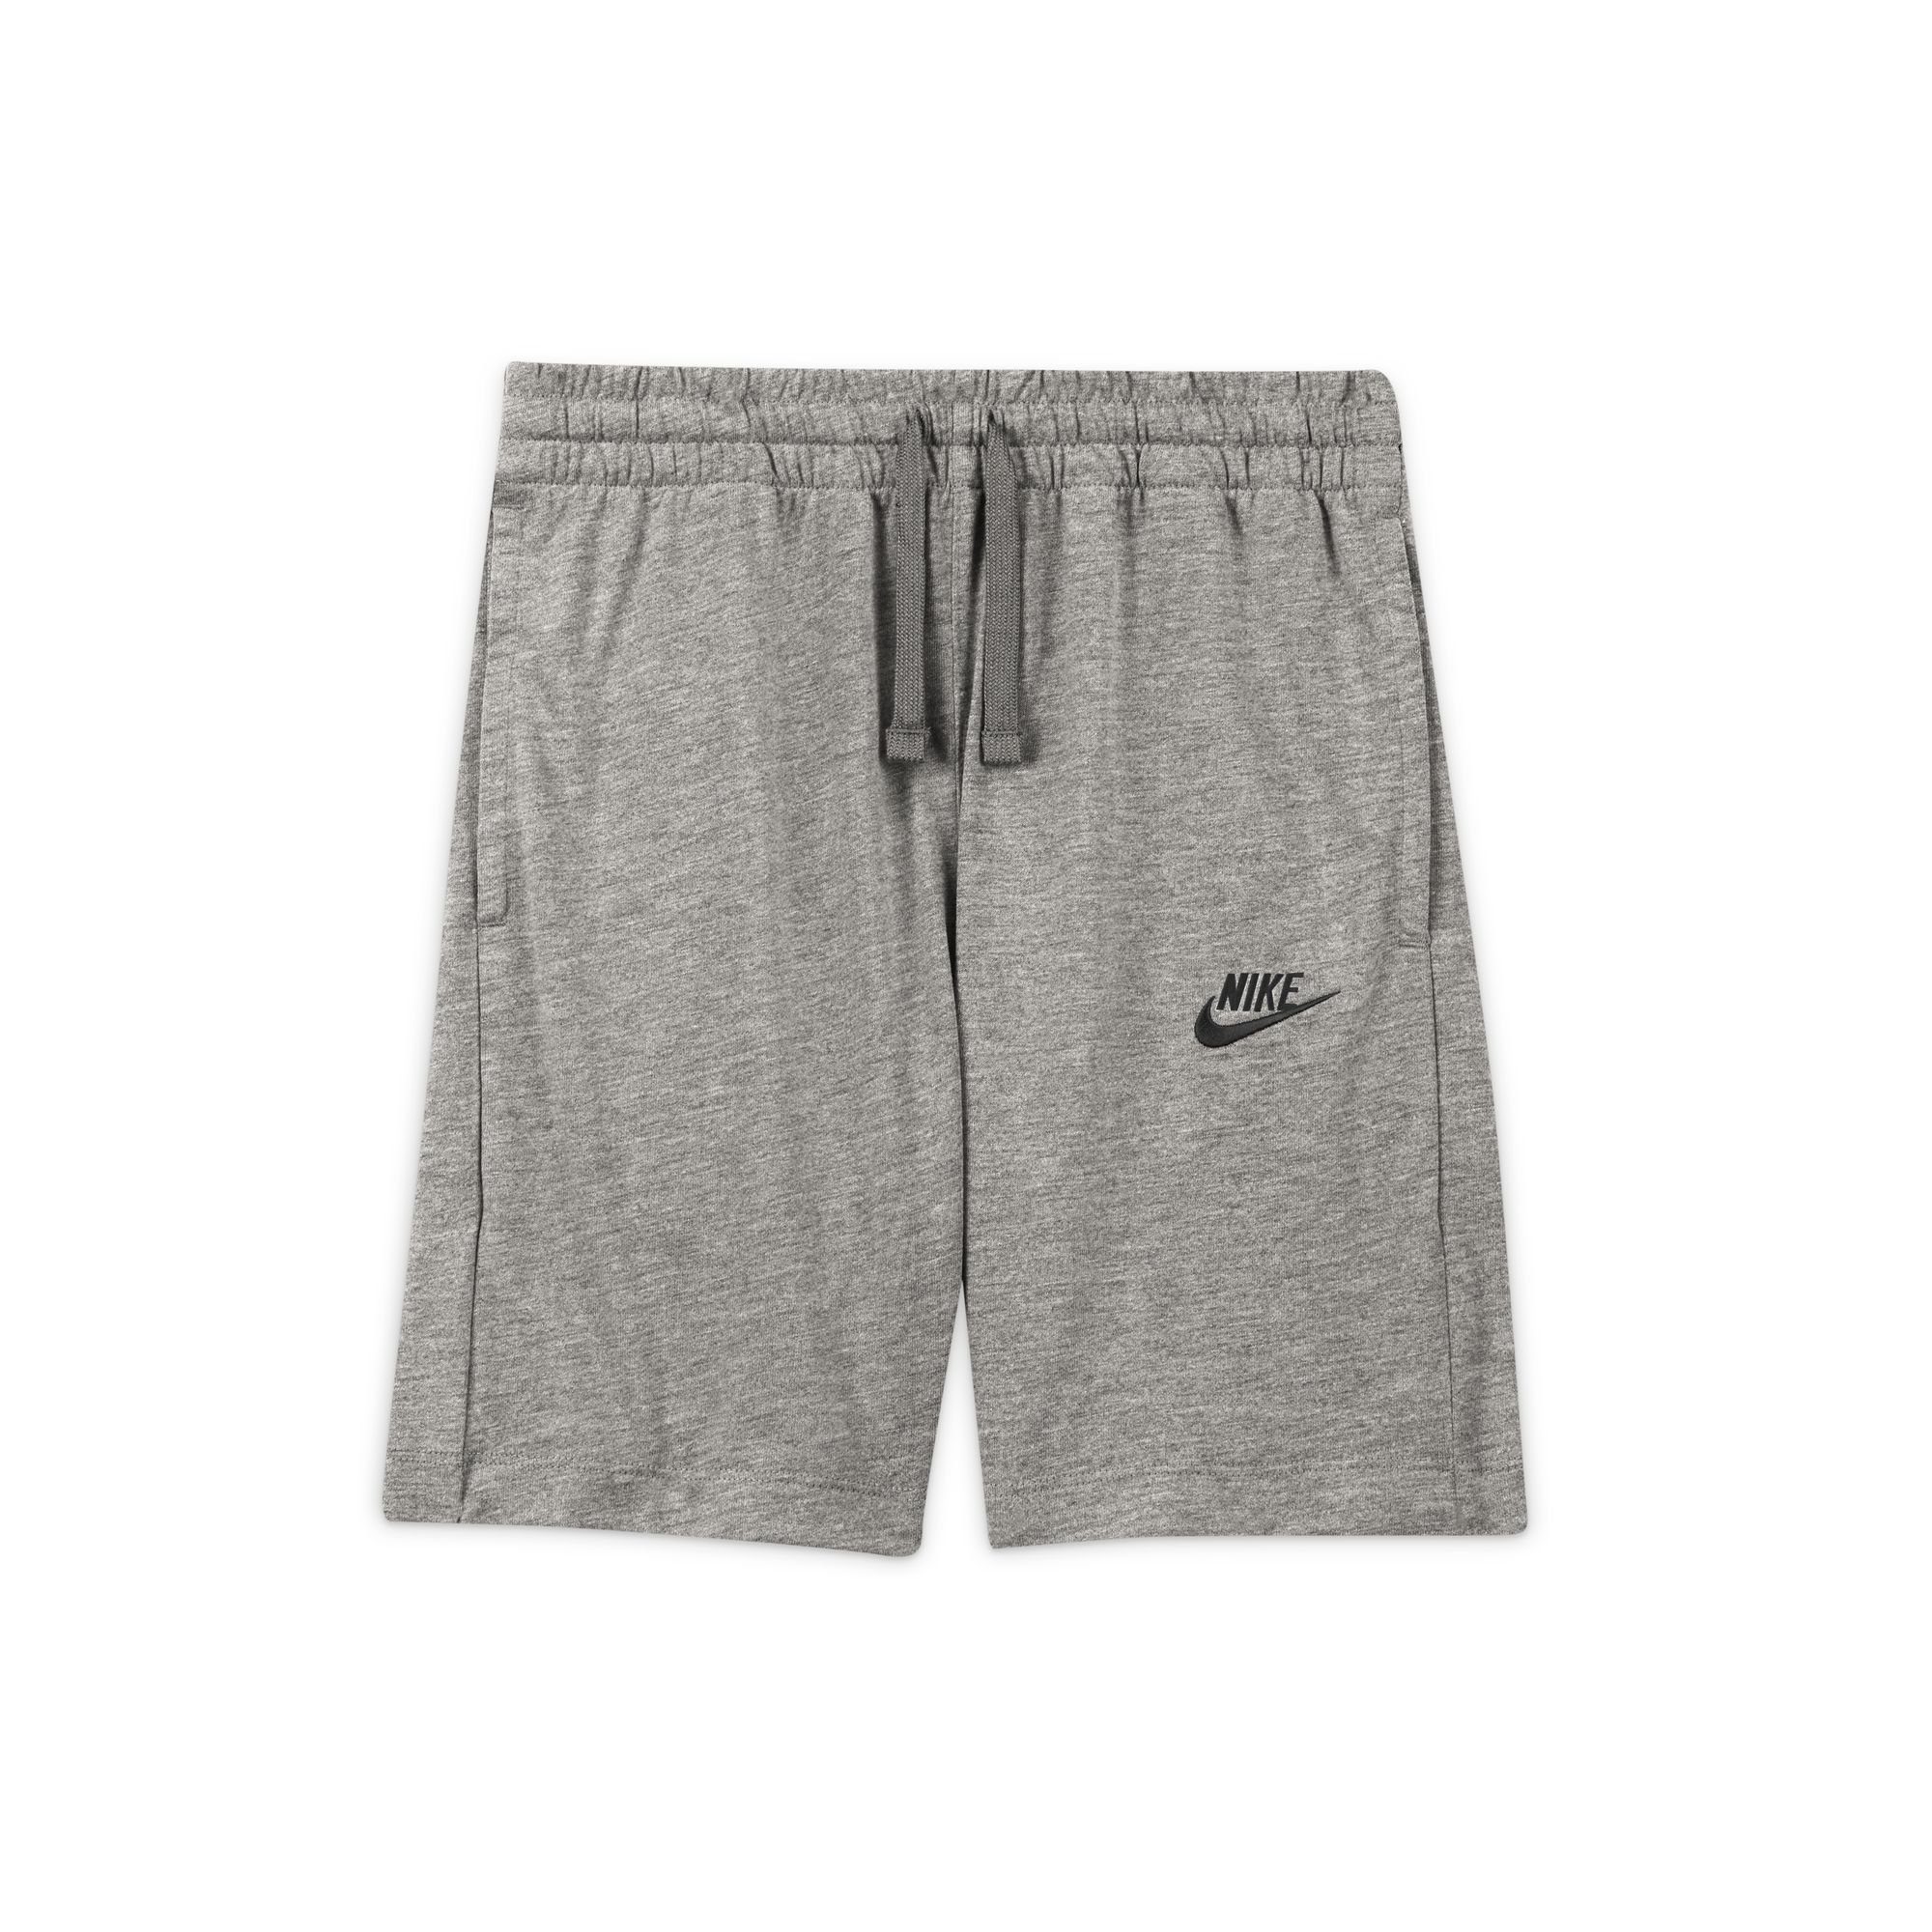 BIG Shorts grau KIDS' (BOYS) SHORTS Sportswear JERSEY Nike